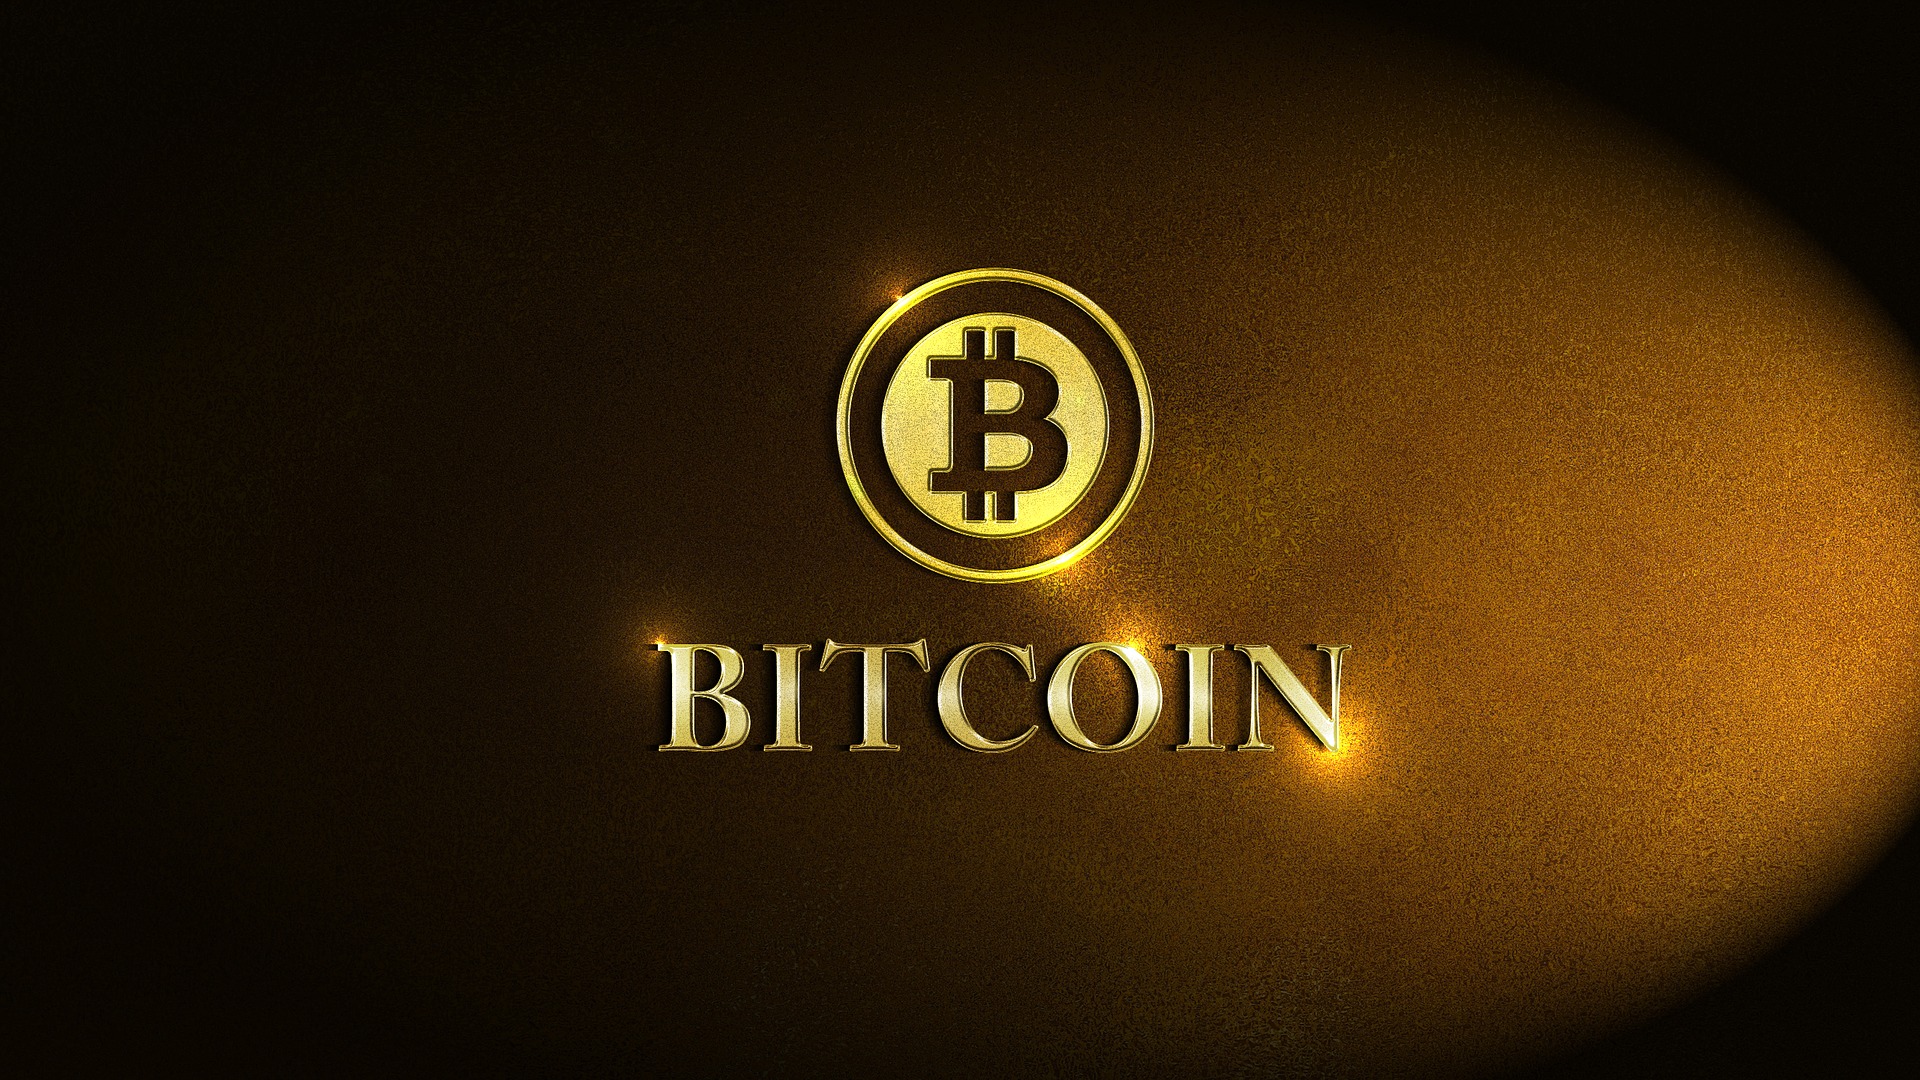 Bitcoin Price crosses $40k amidst the Crypto Rally